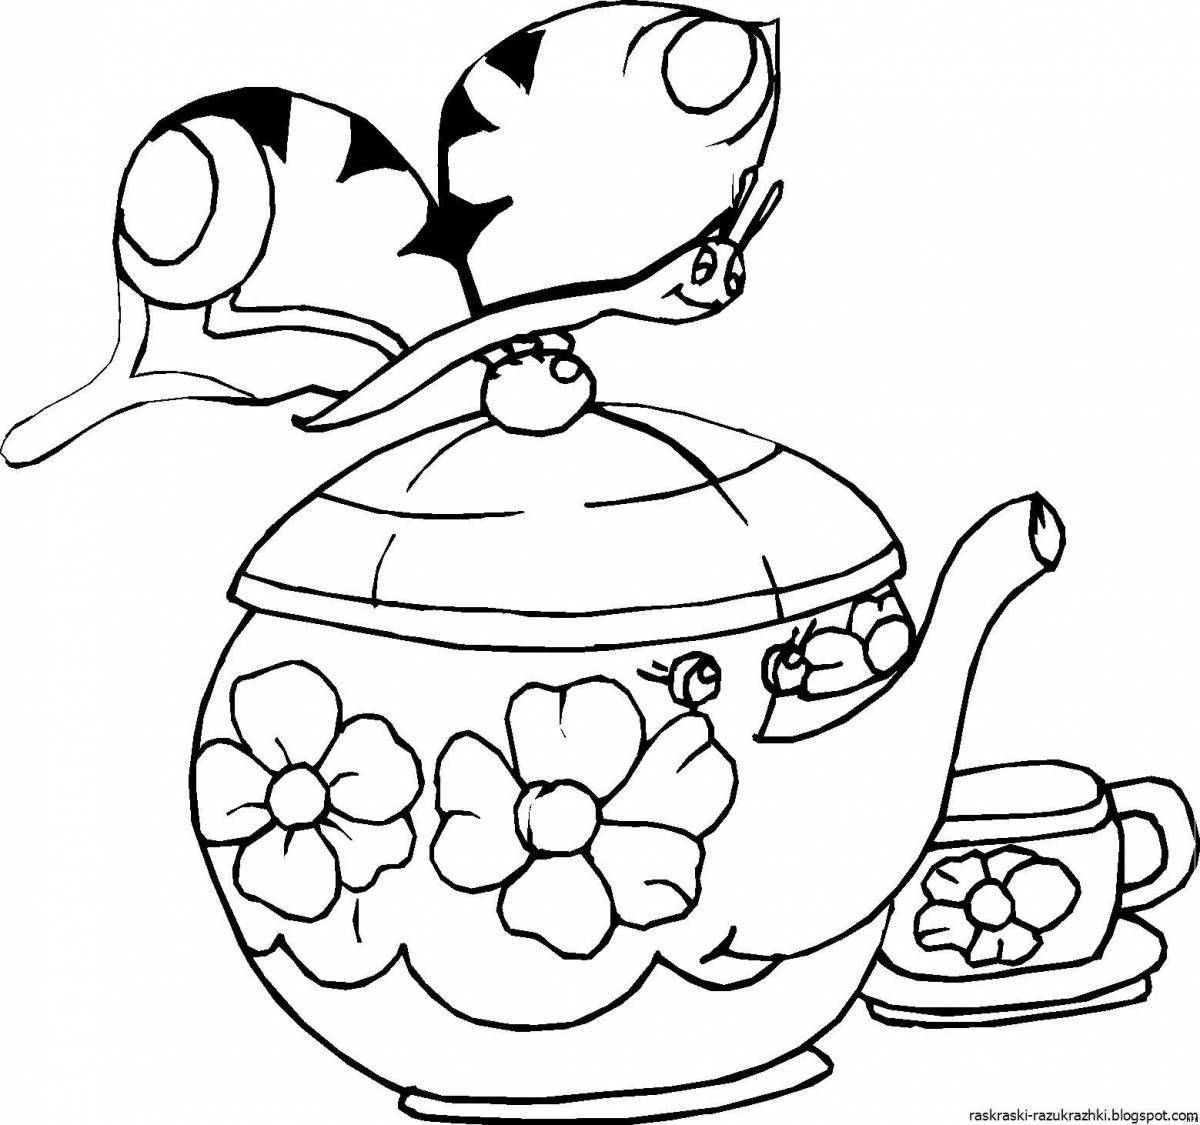 Adorable tea utensils coloring book for kids